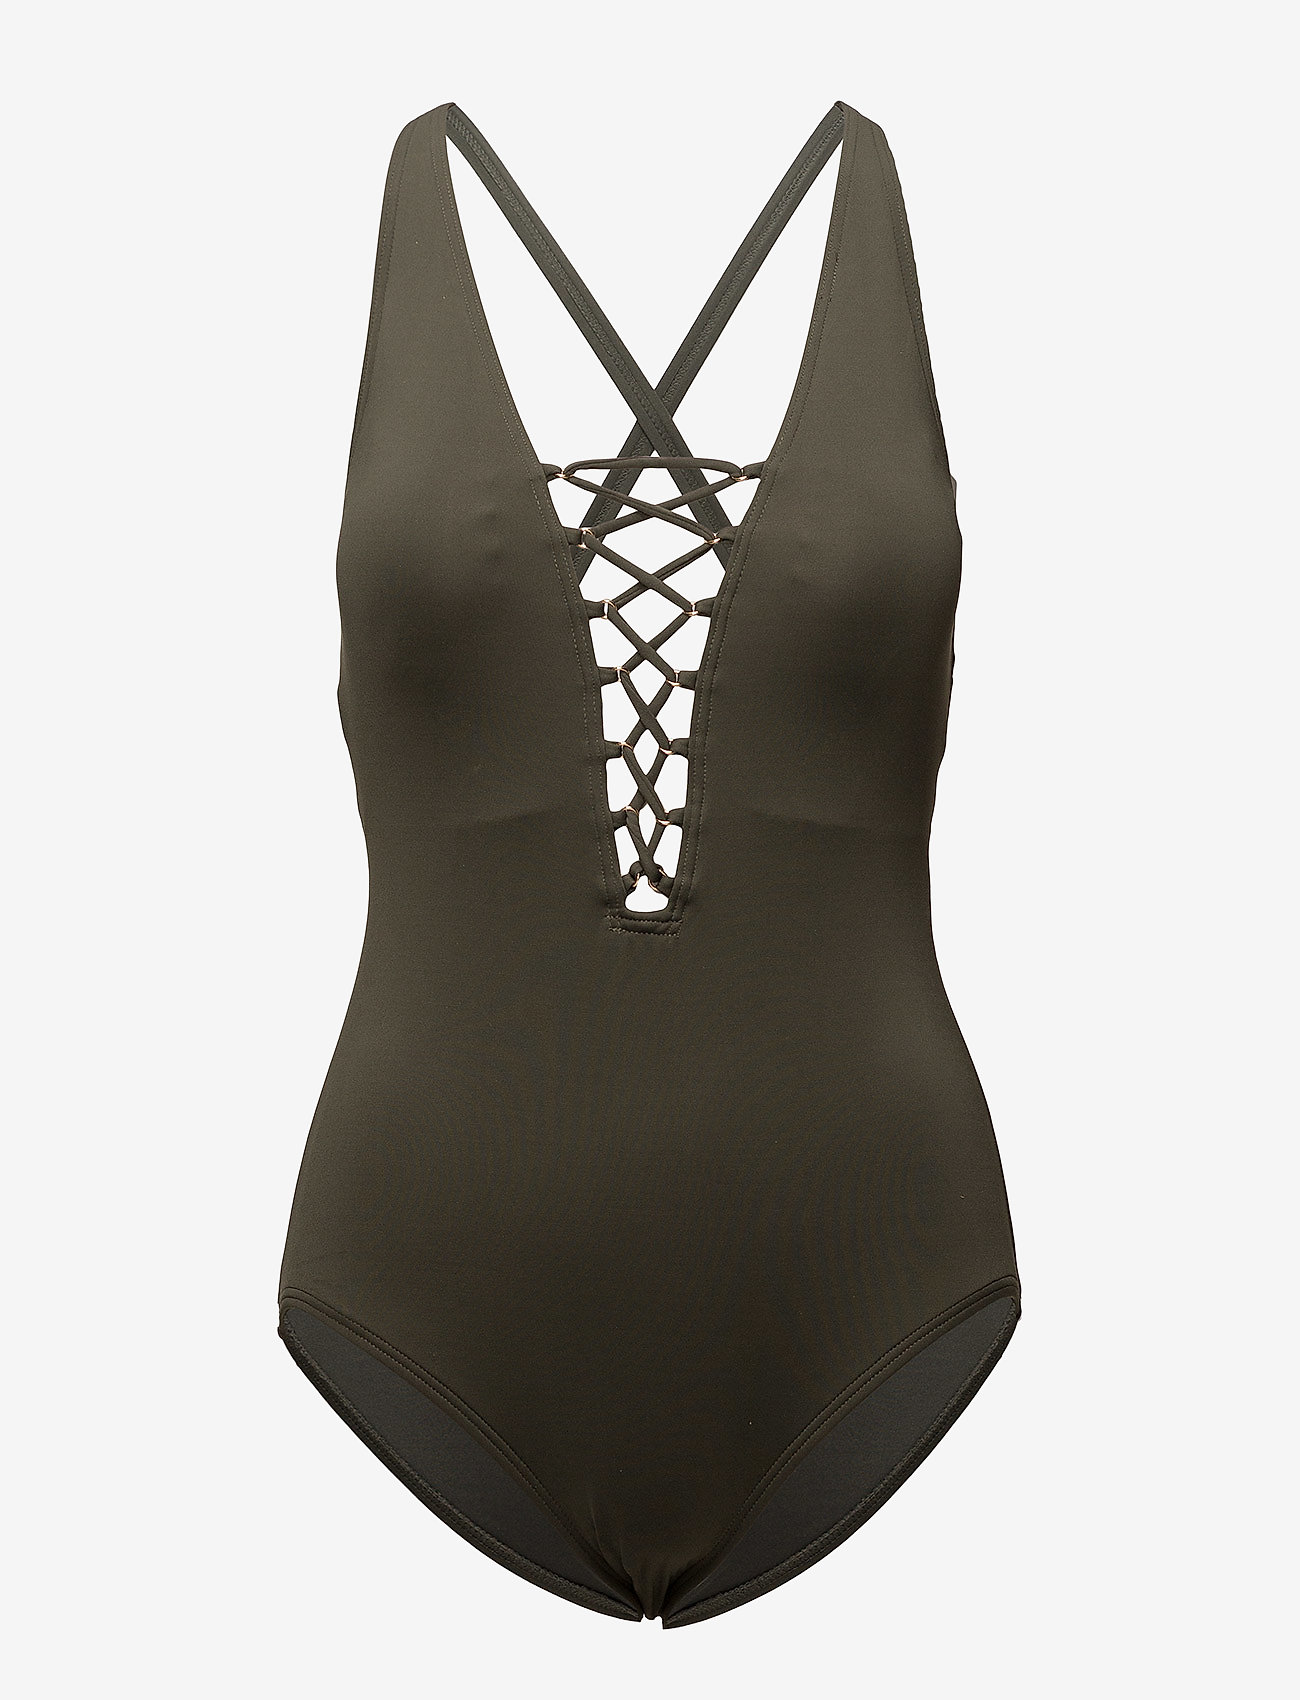 Michael Kors Swimwear X-back 1pcs (White) - 1199 kr | Boozt.com